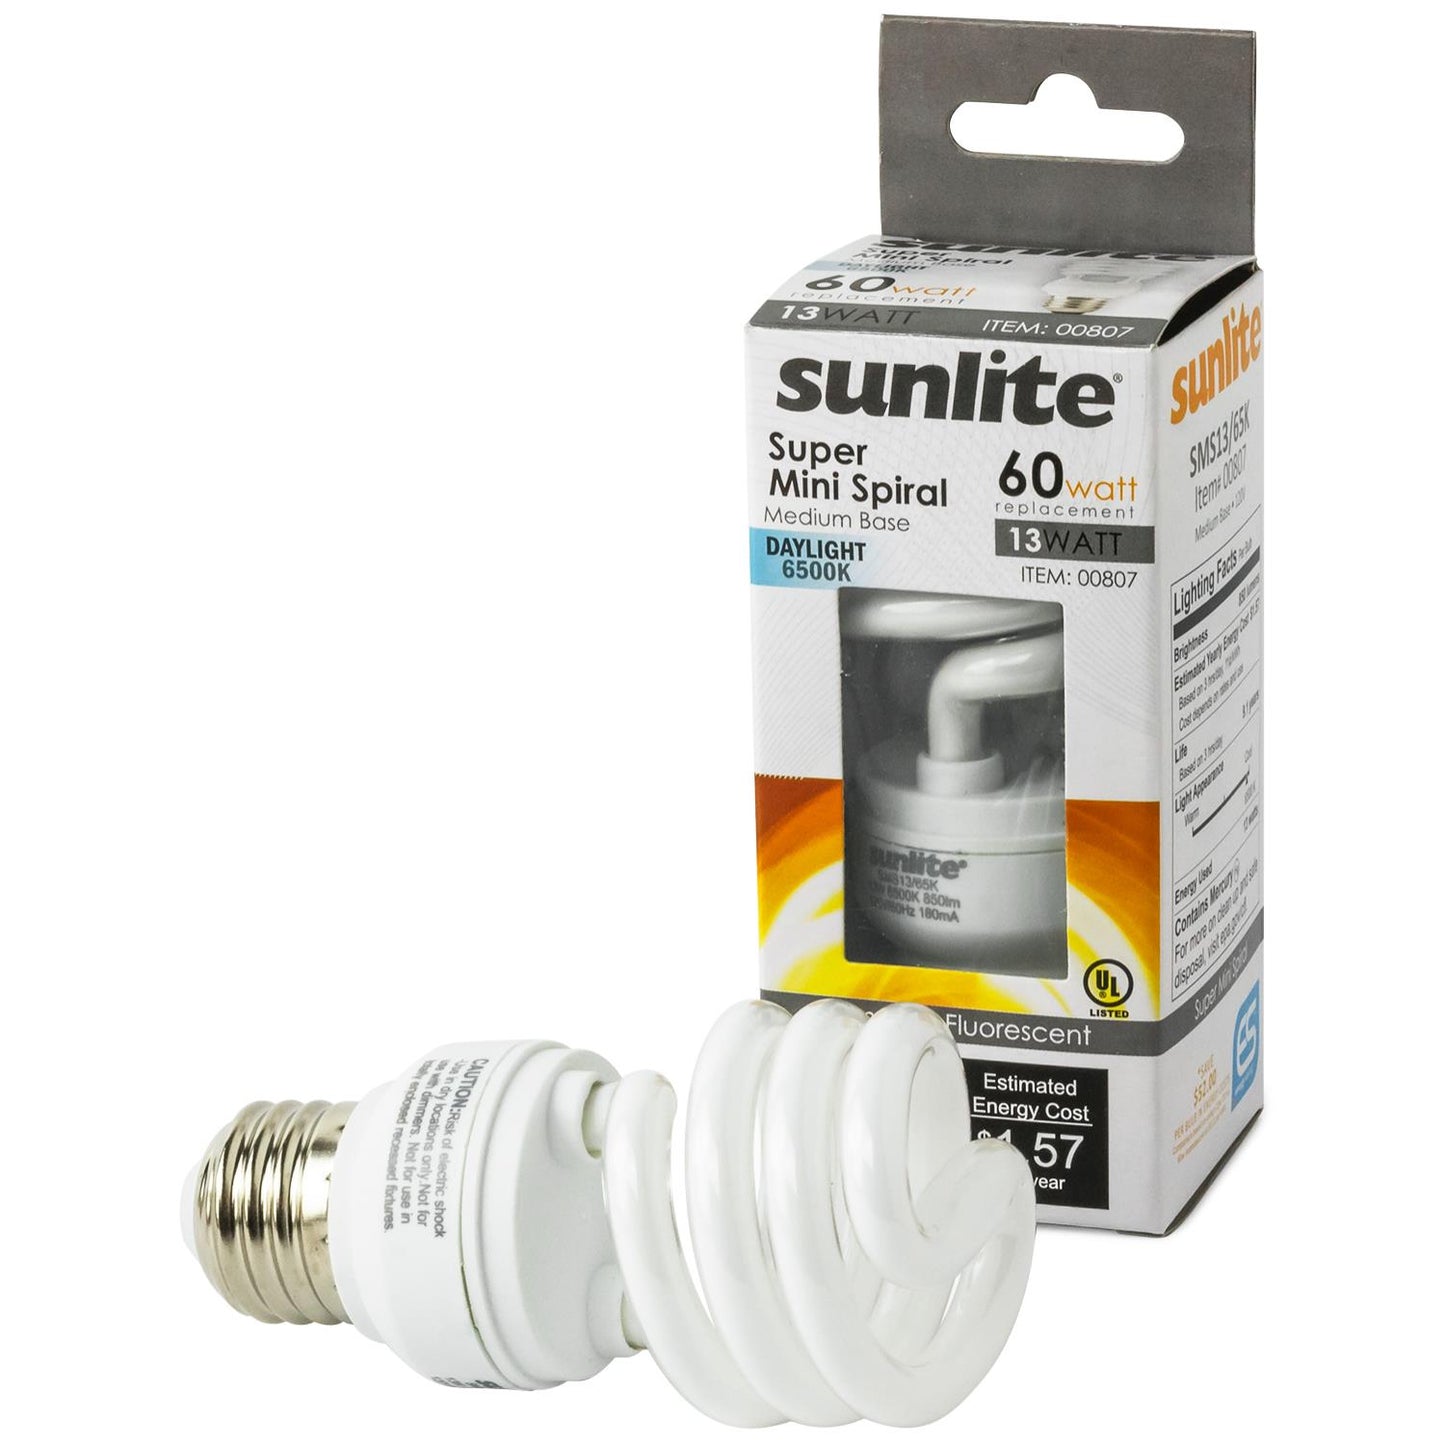 Sunlite 13 Watt Super Mini Spiral Medium Base Daylight (6 Pack)